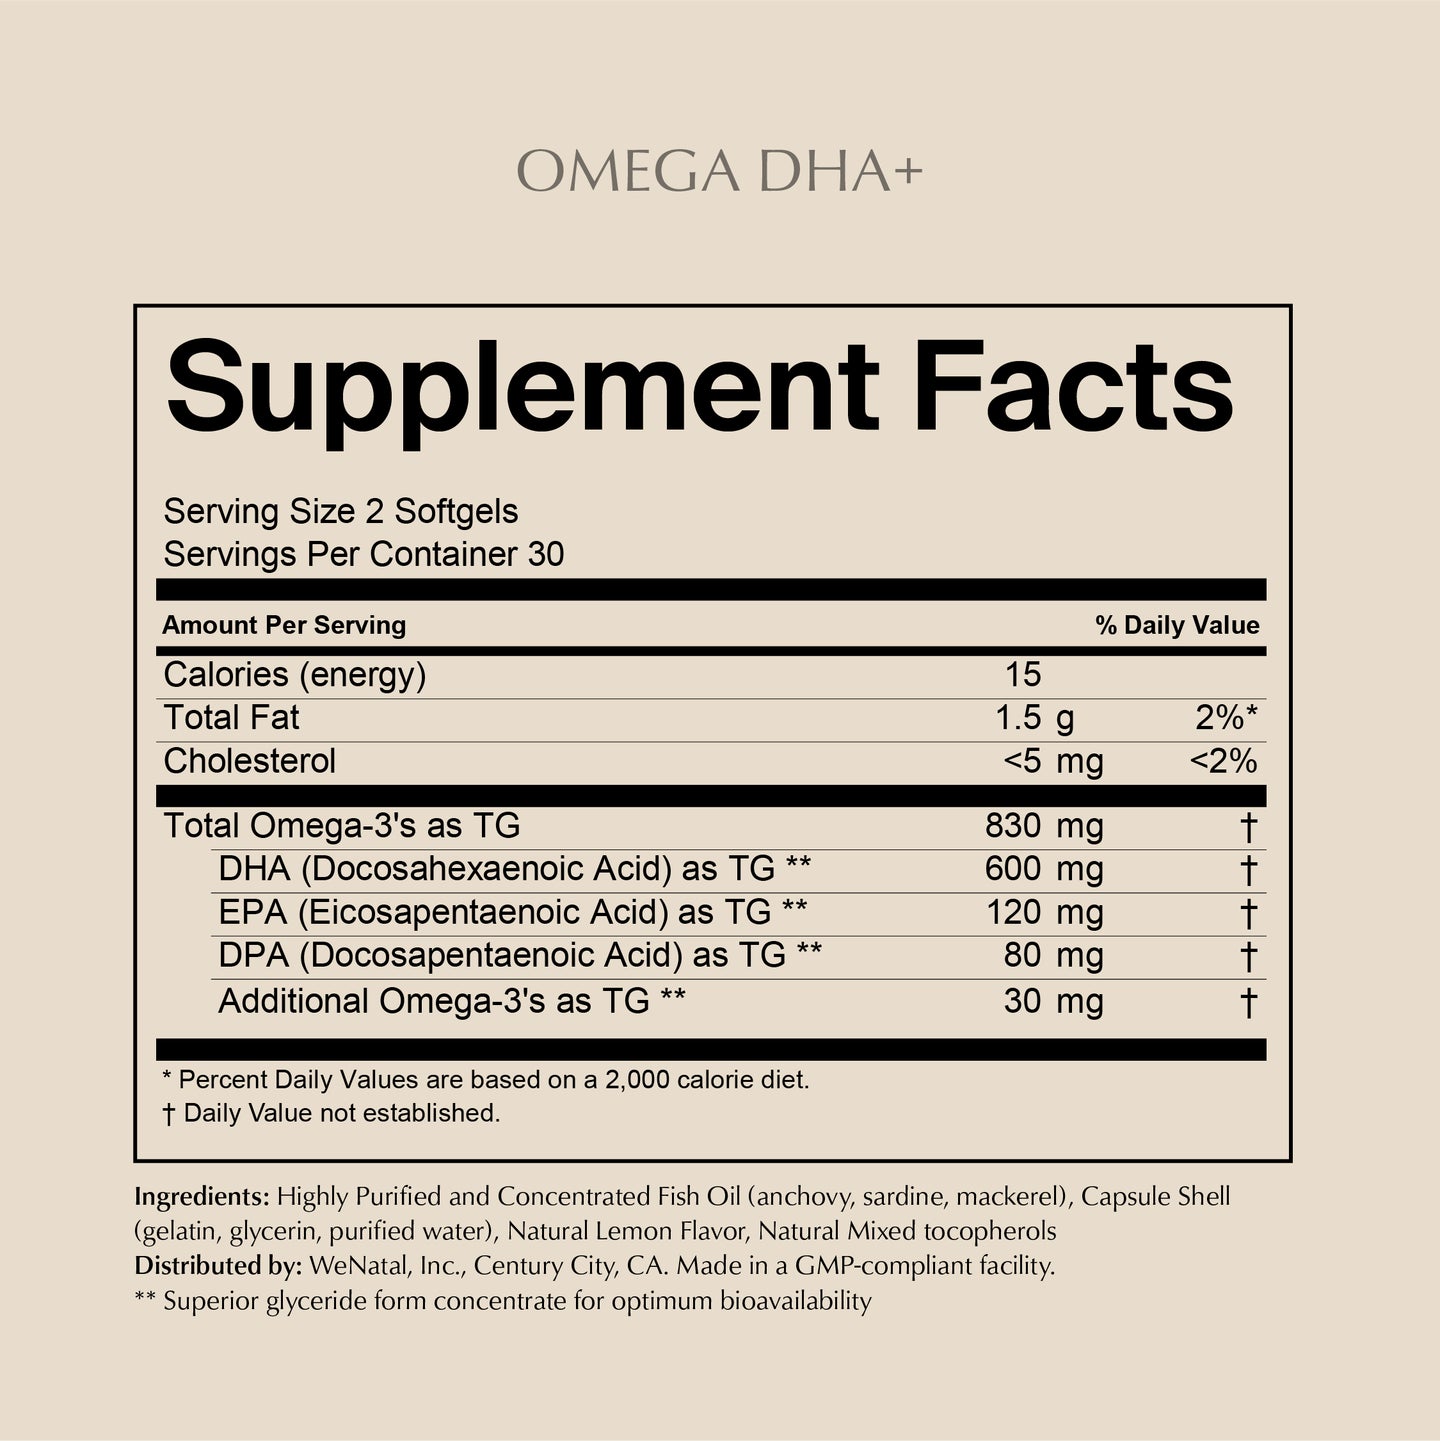 Omega DHA+ nutrition label